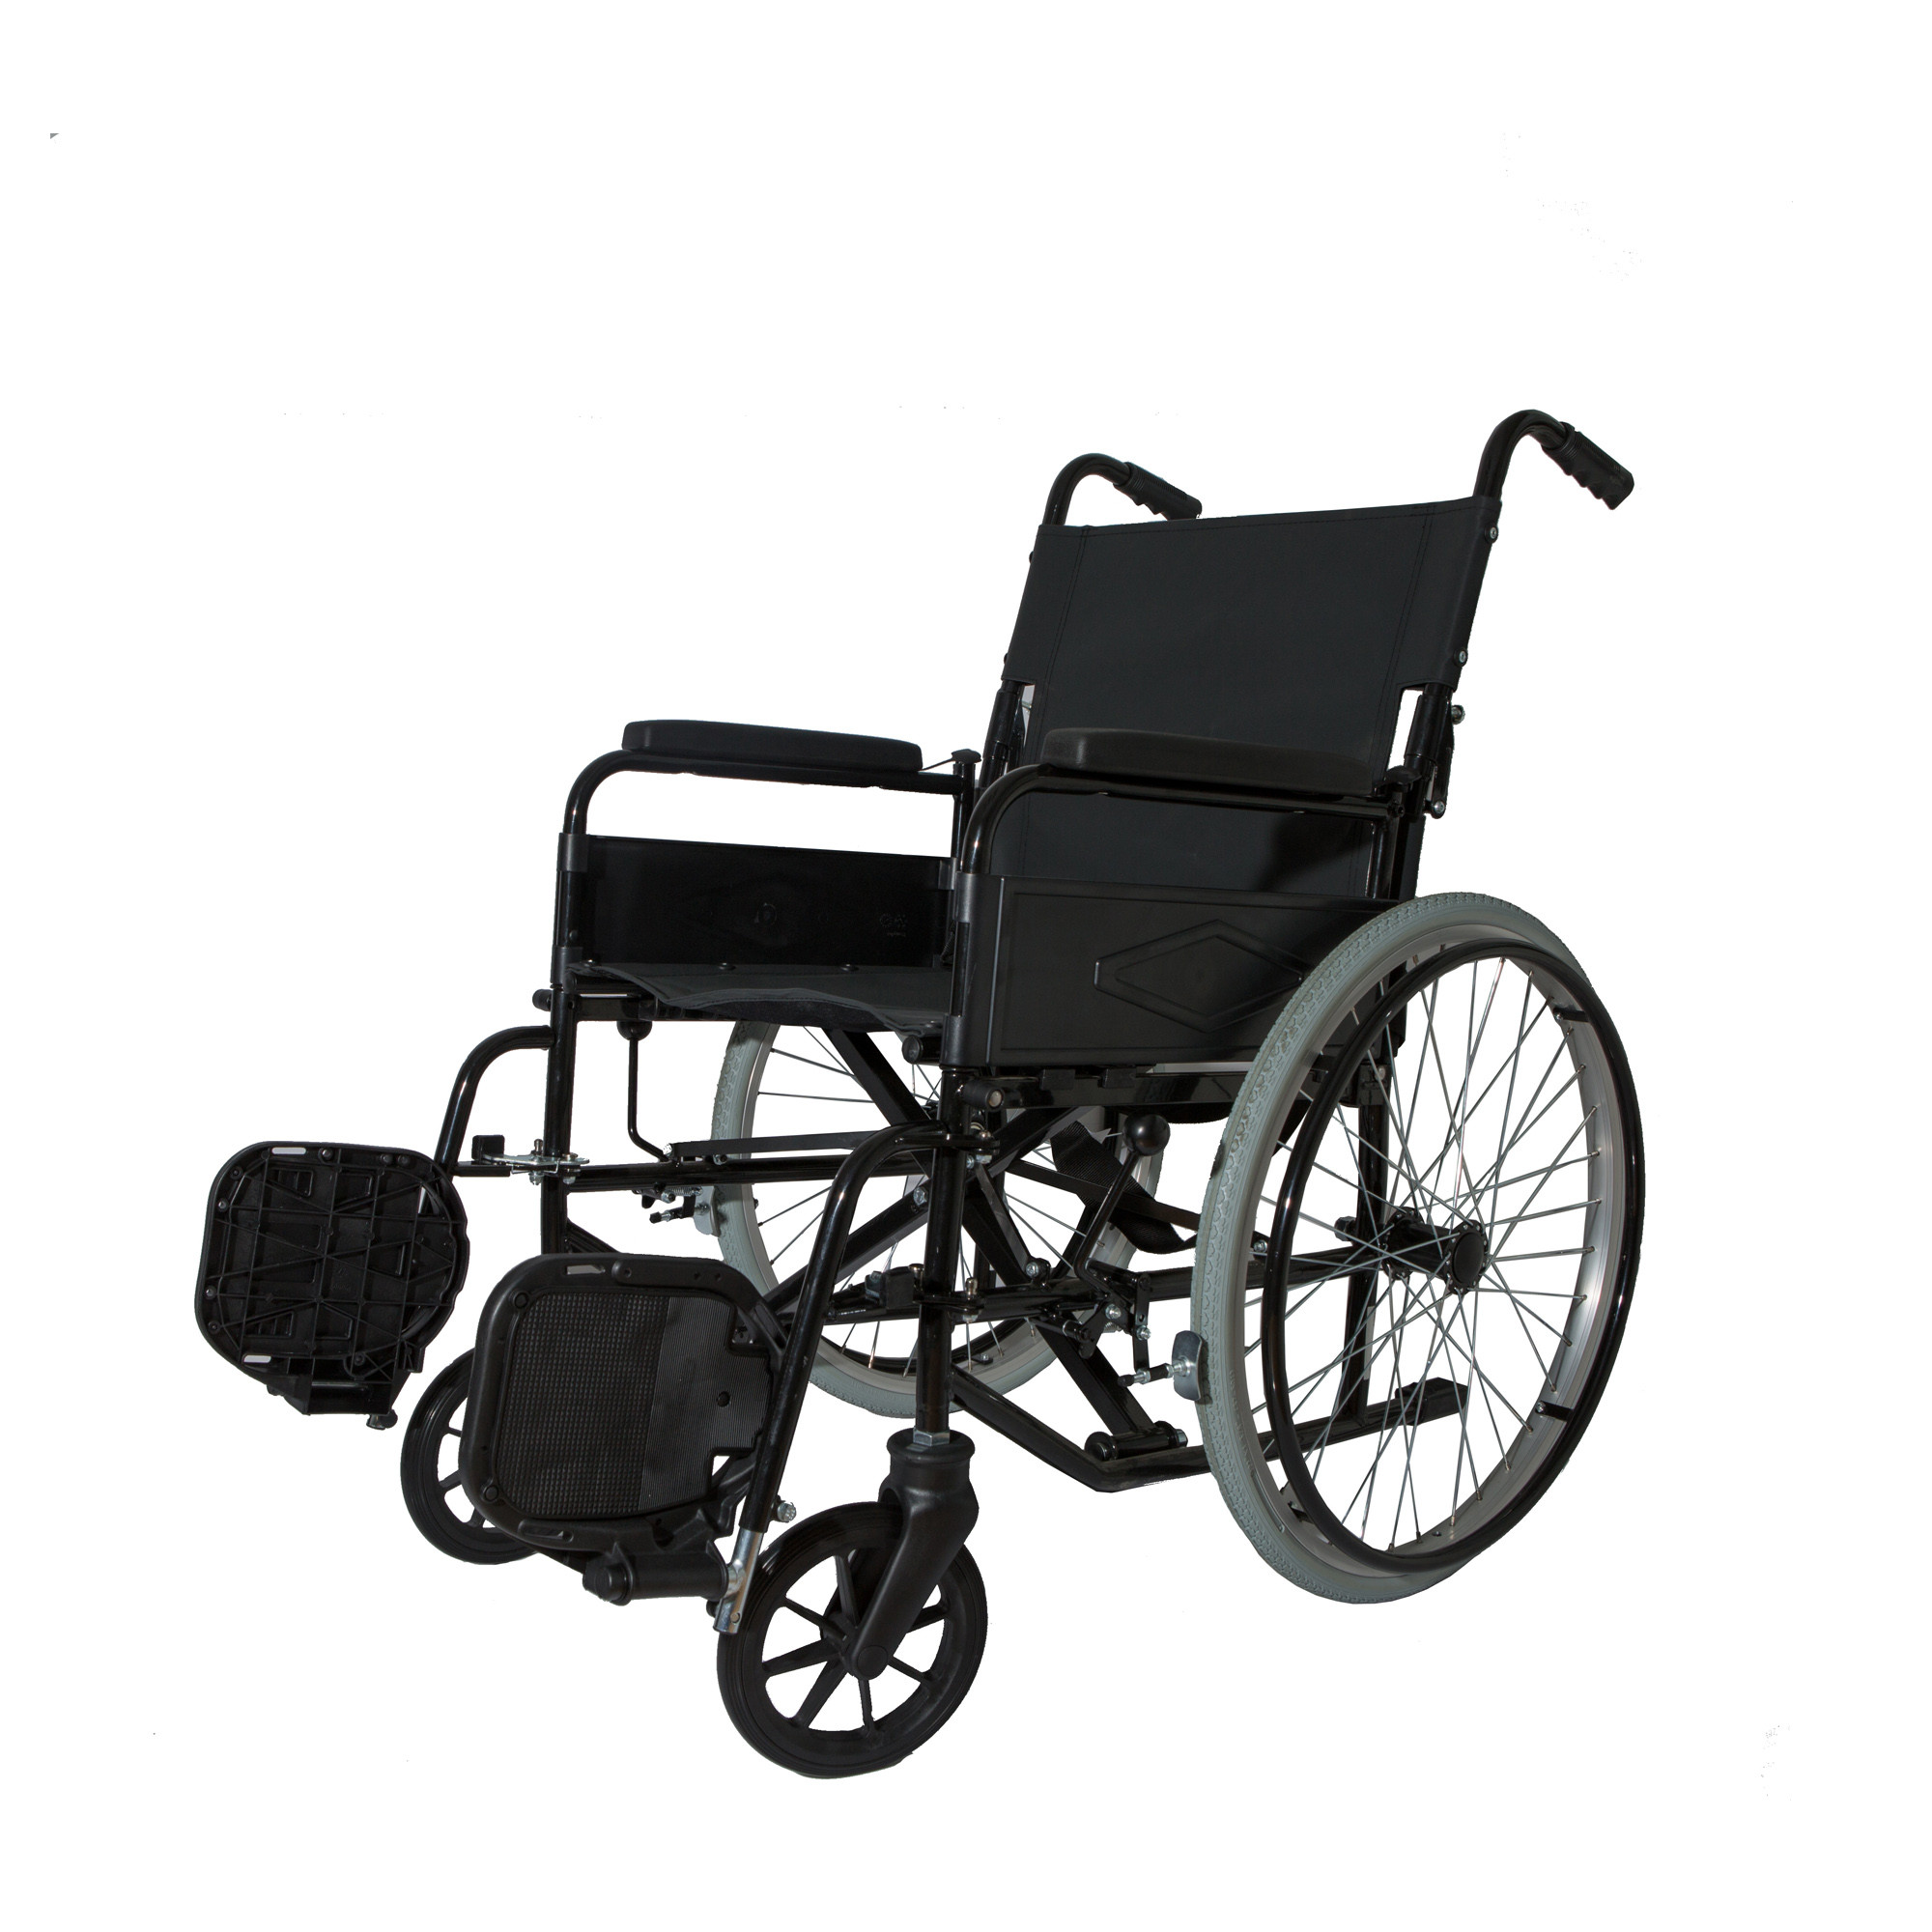 8trlj Child Self Propelled Wheelchair